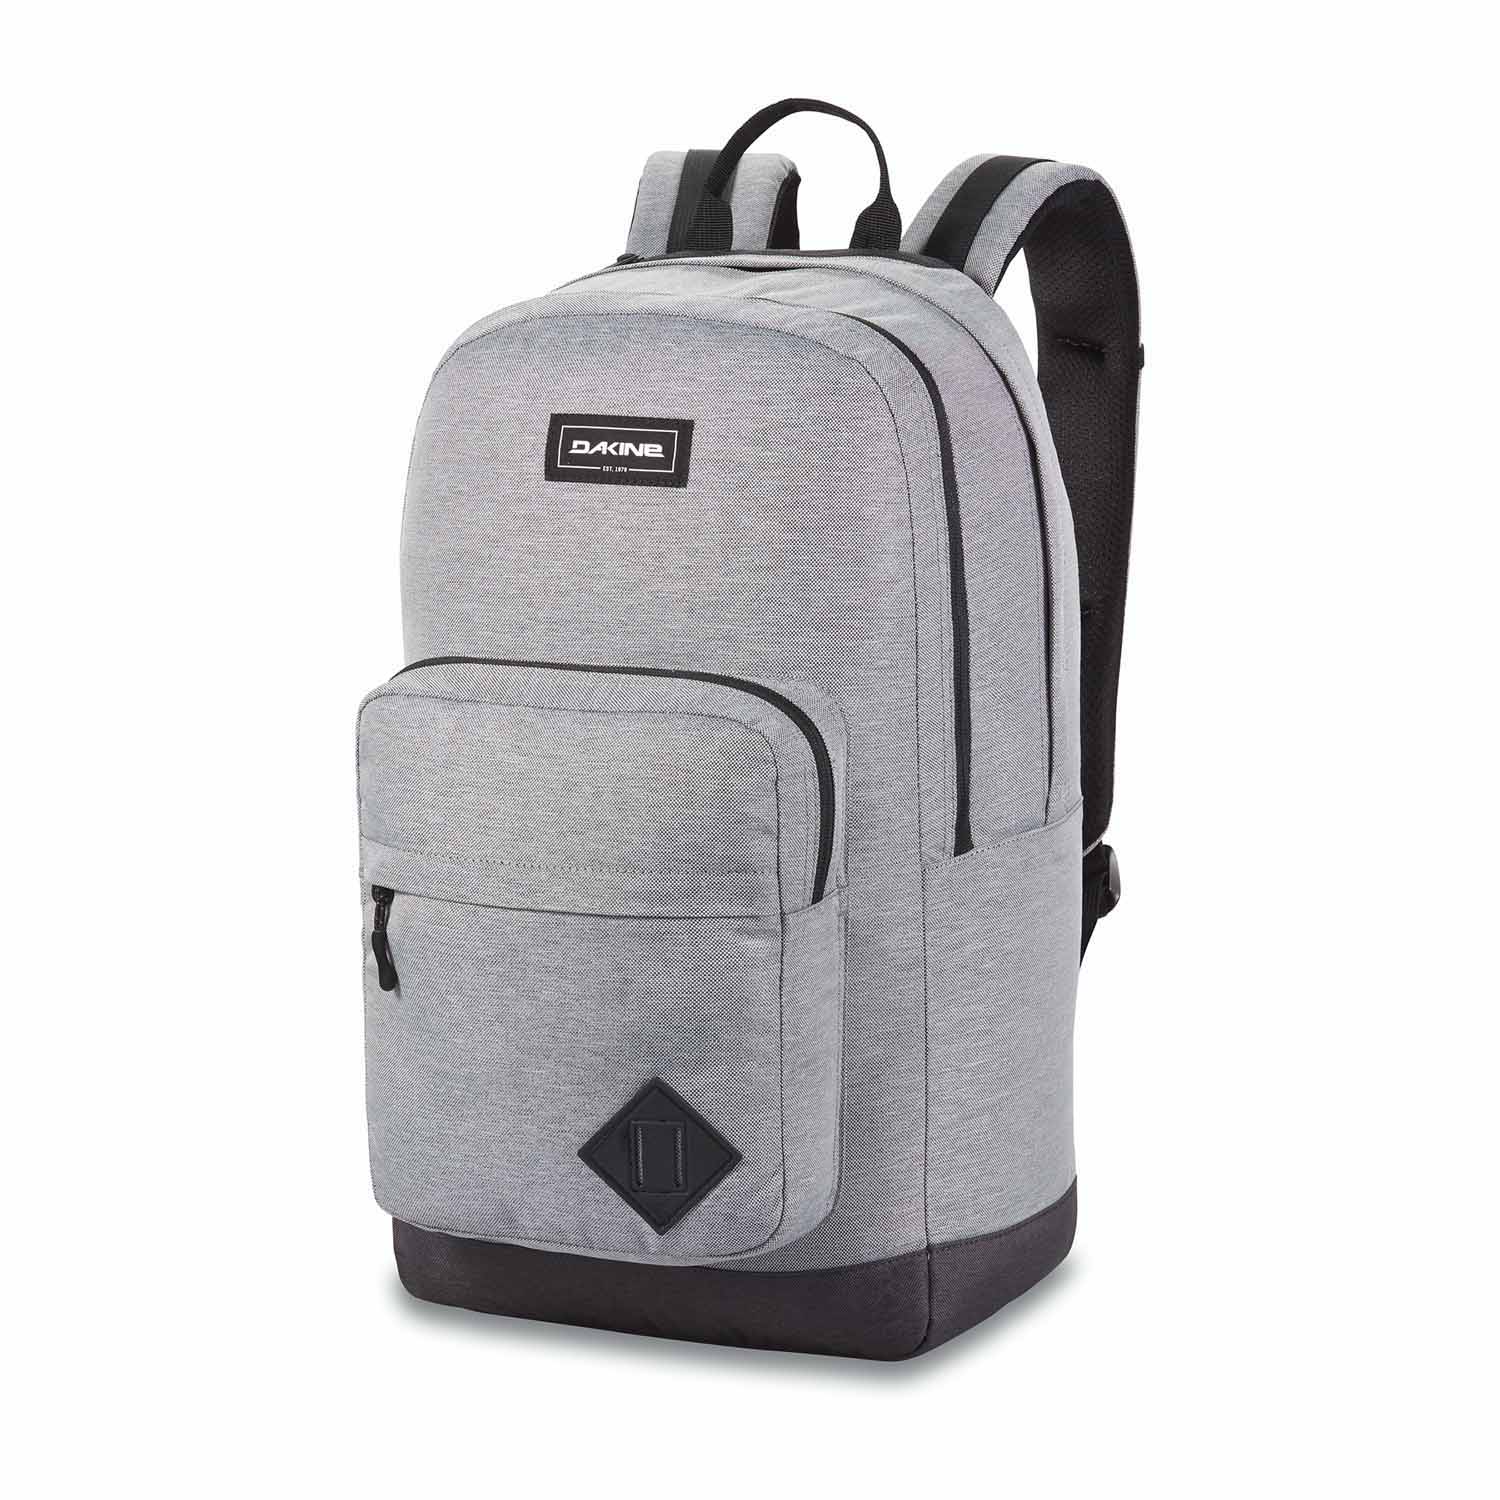 Dakine 365 Pack DLX 27L Backpack Geyser Grey